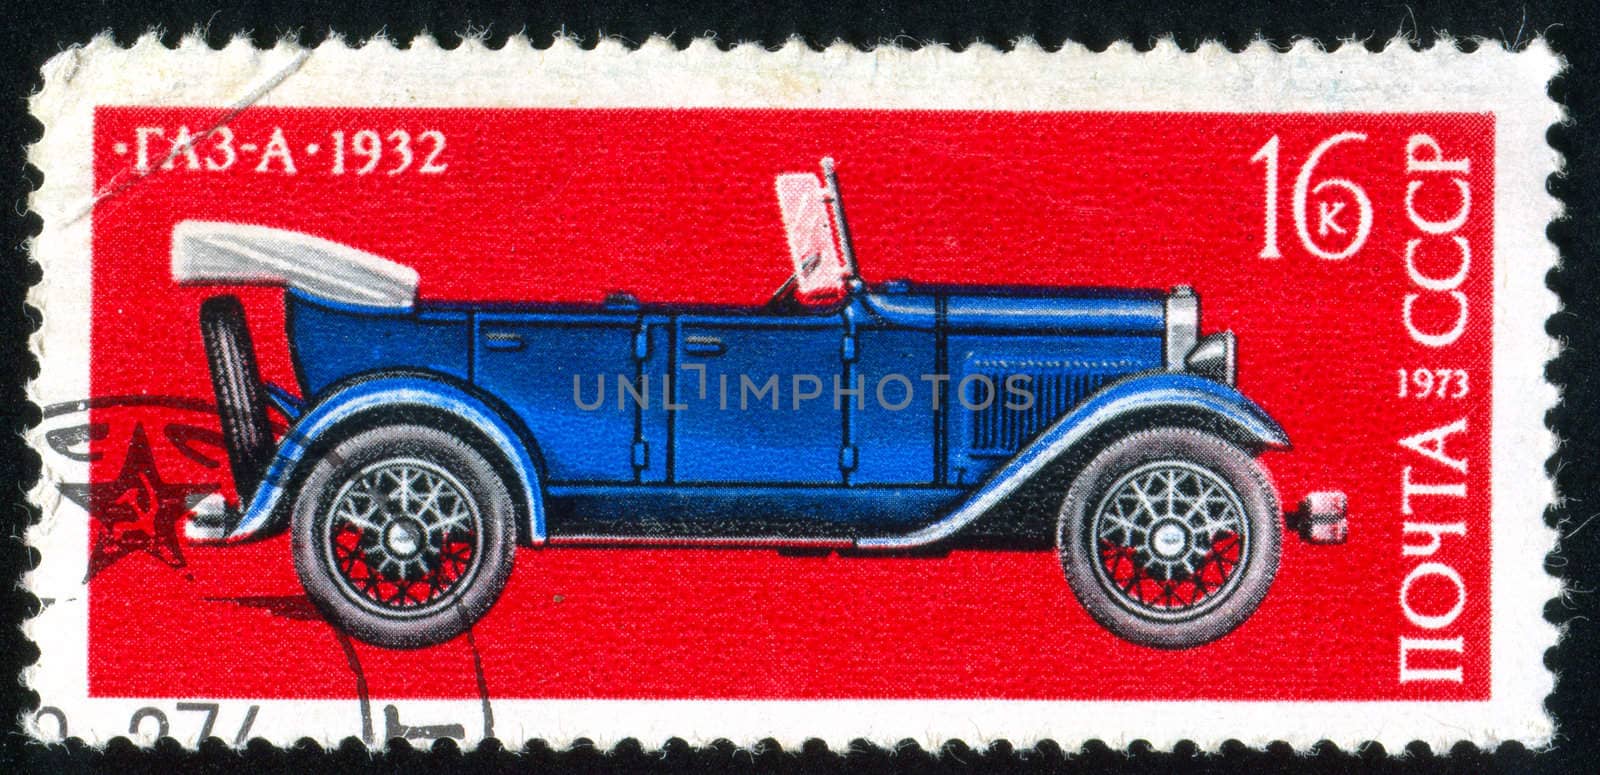 RUSSIA - CIRCA 1973: stamp printed by Russia, shows car, circa 1973.